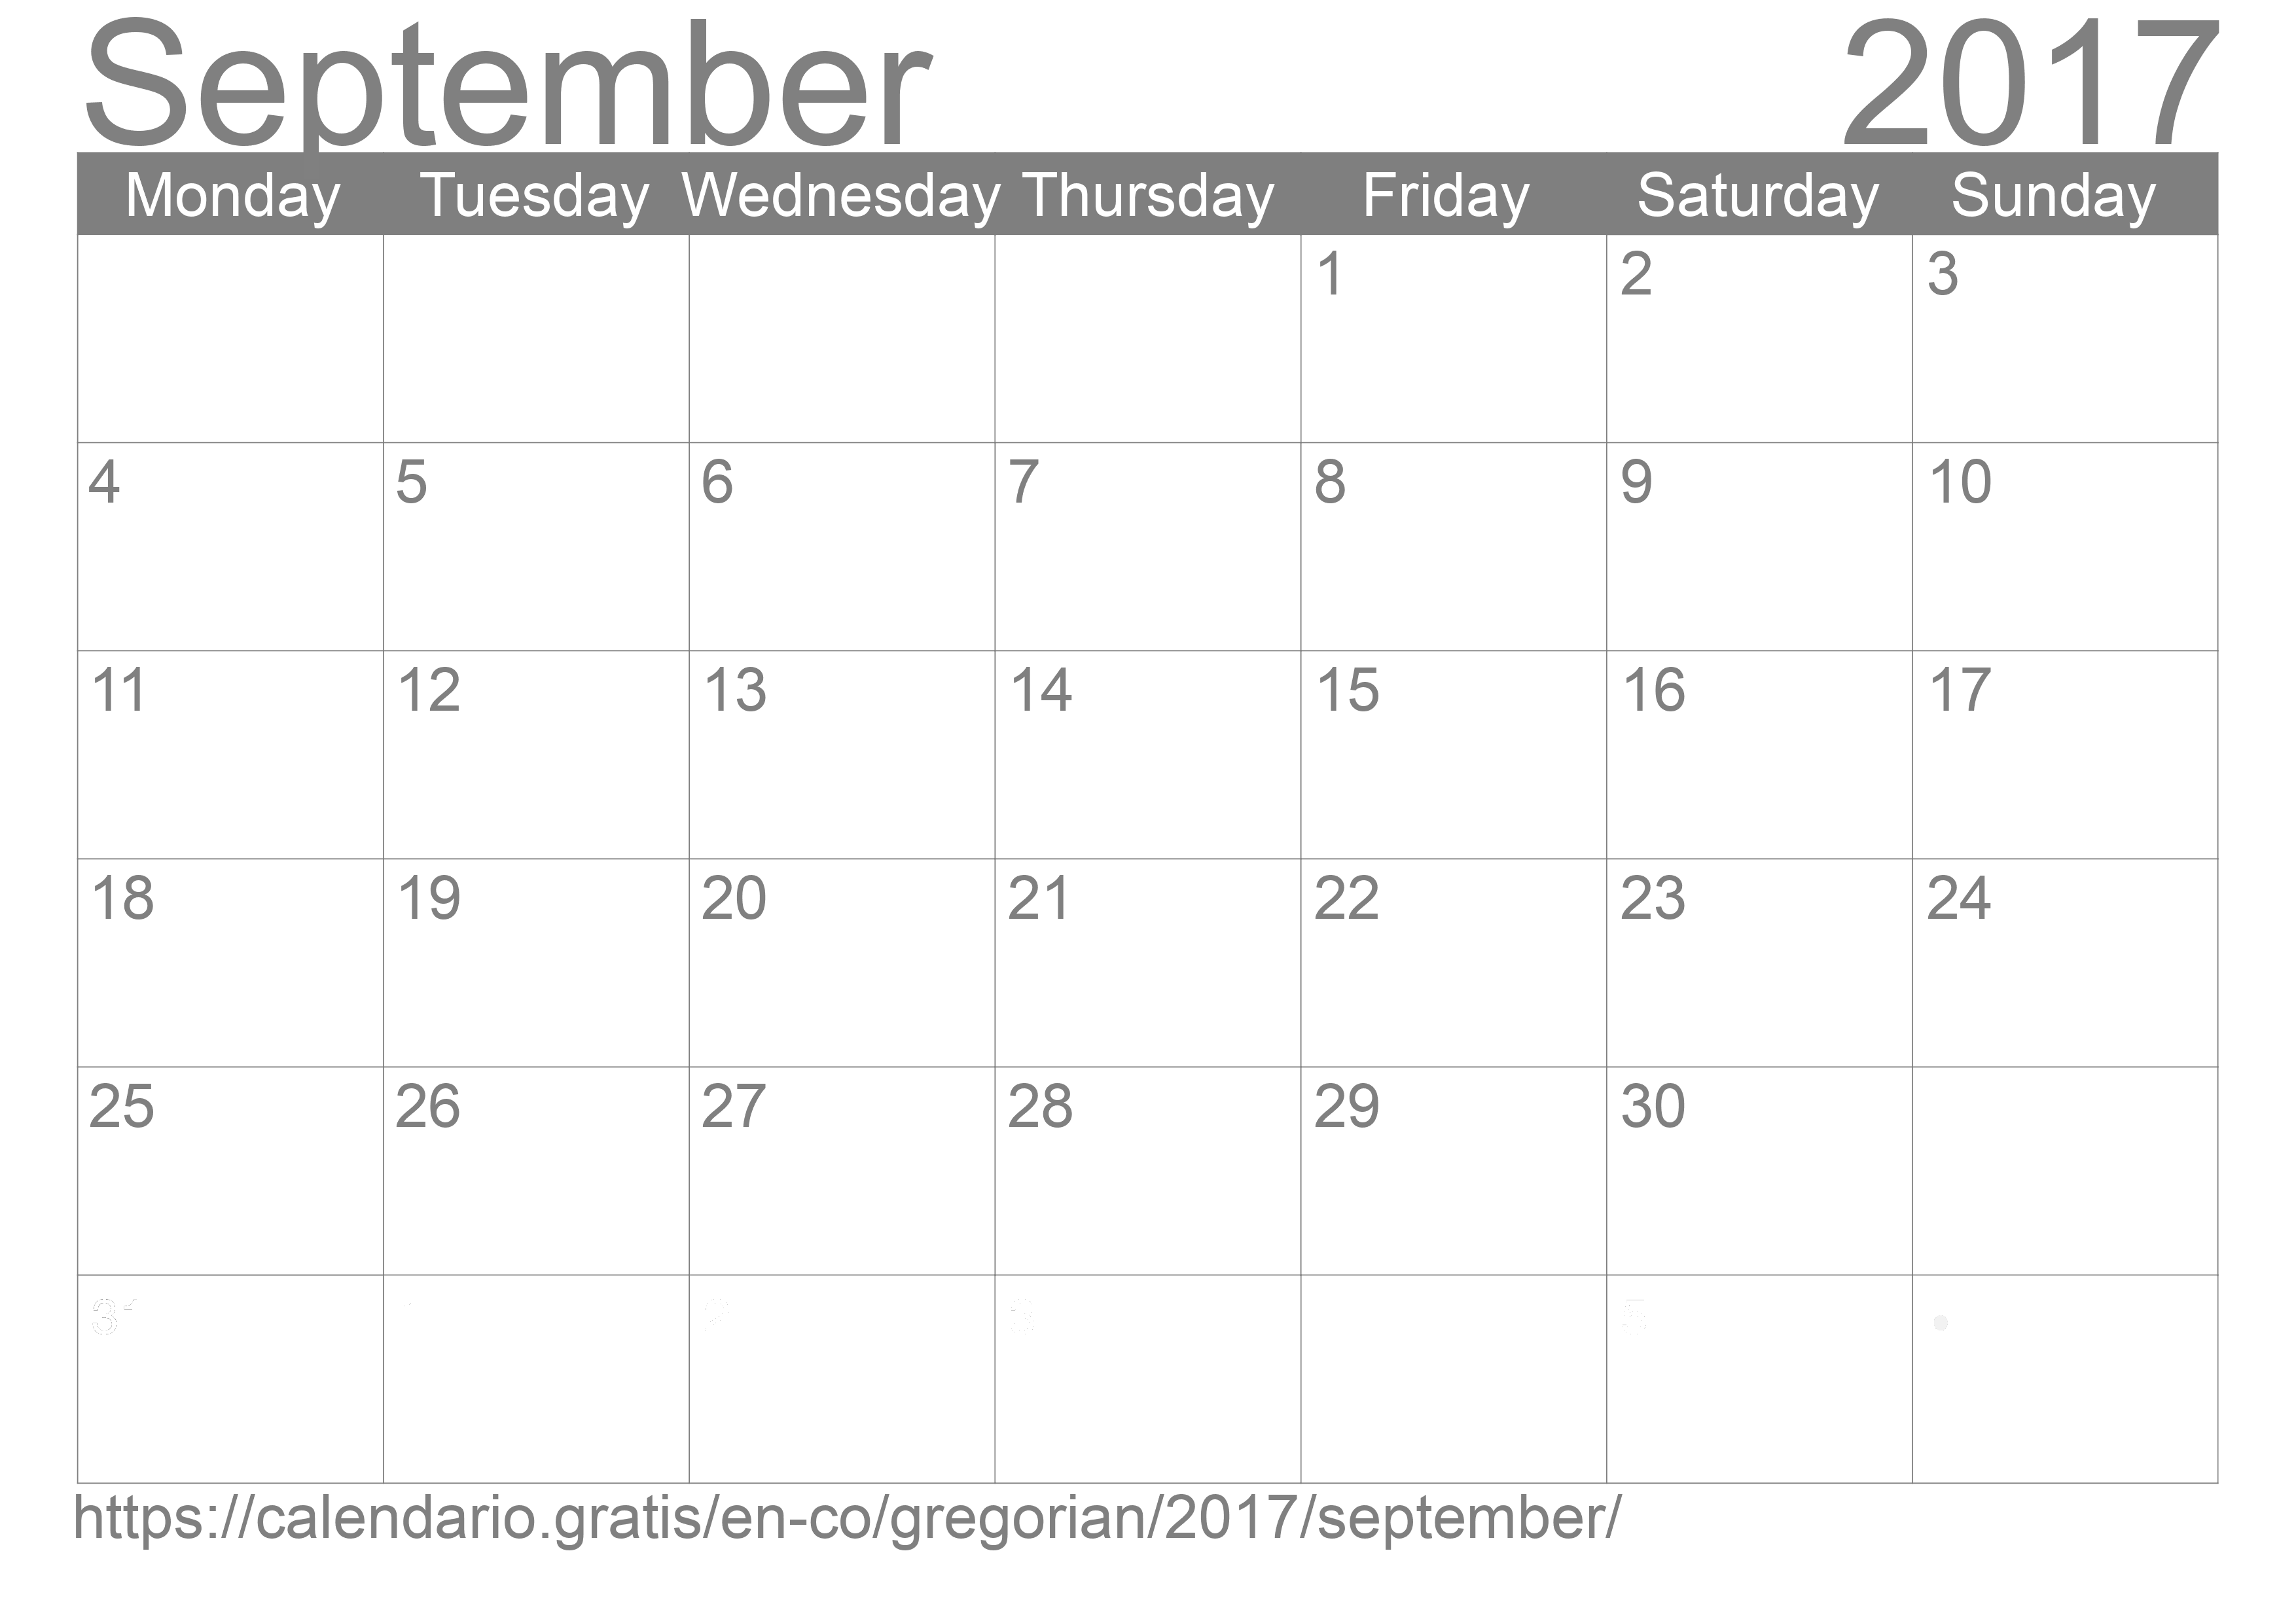 Calendar September 2017 to print